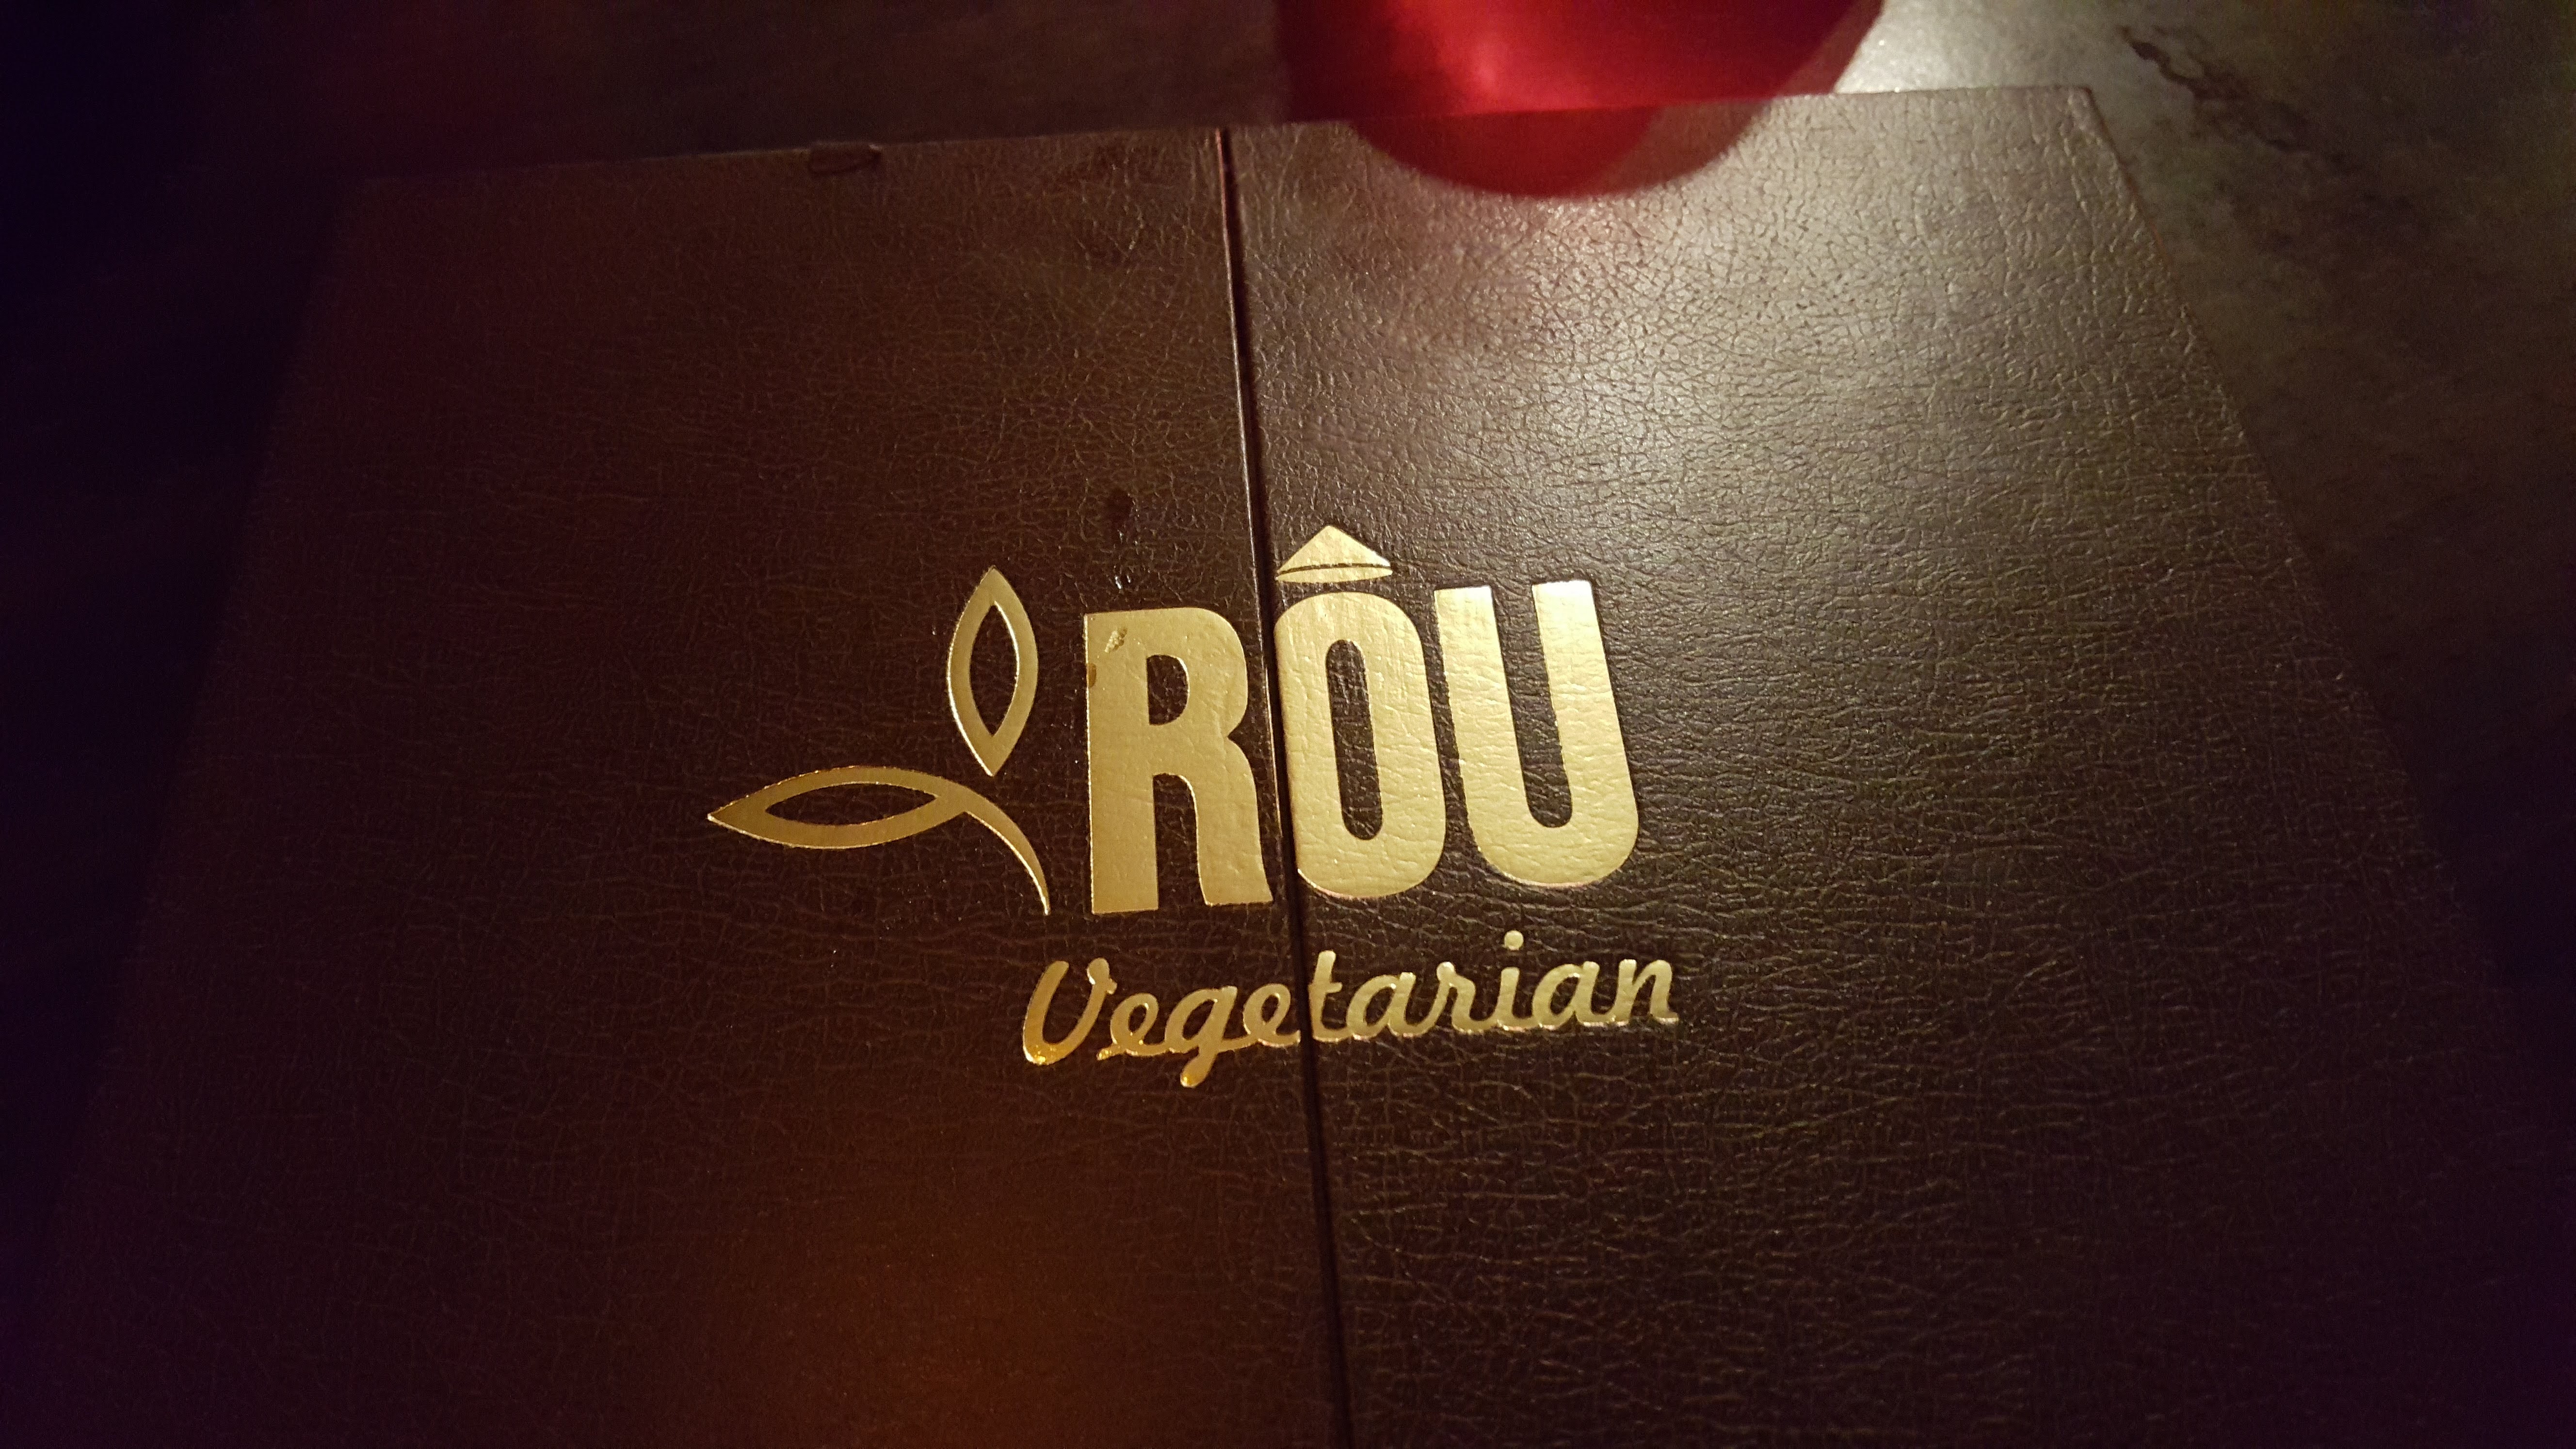 Rou Vegetarian, Berlin